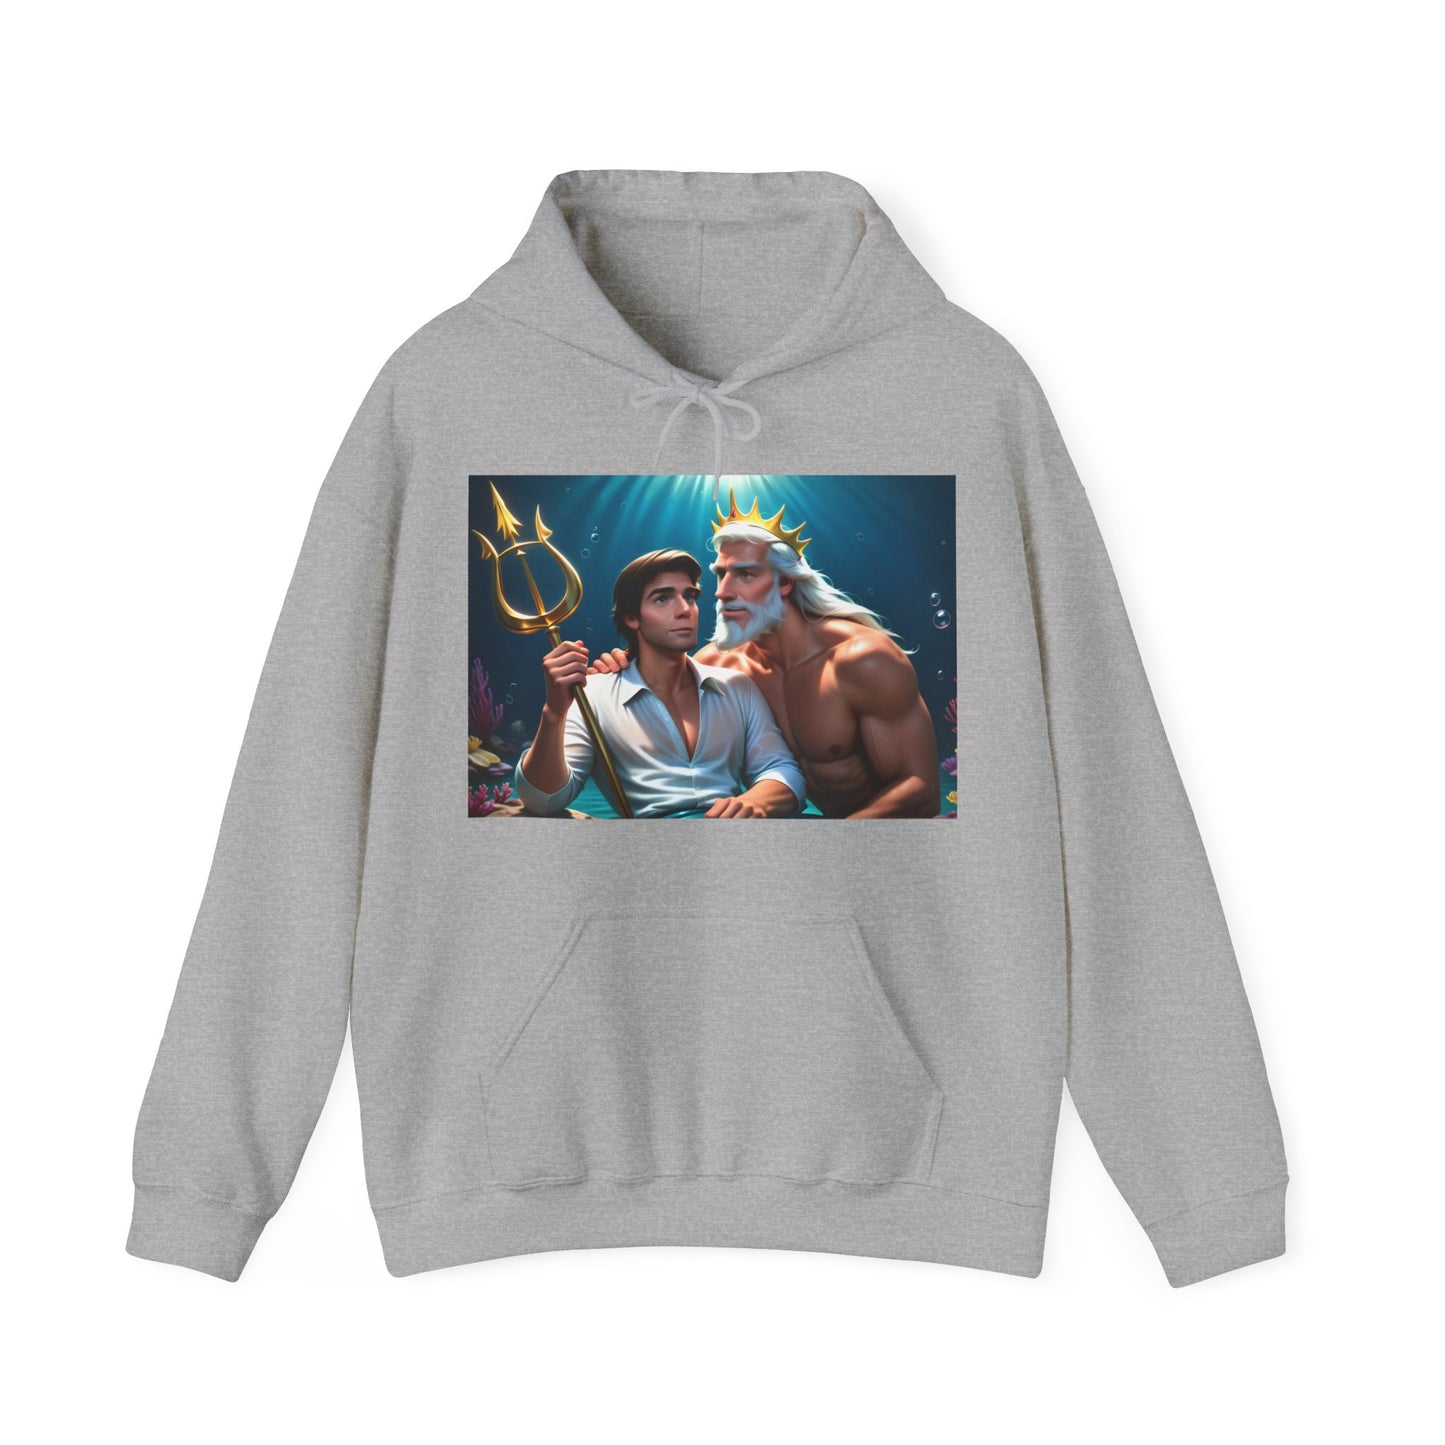 Gray Gay Prince Eric and gay daddy King Triton hoodie sweatshirt